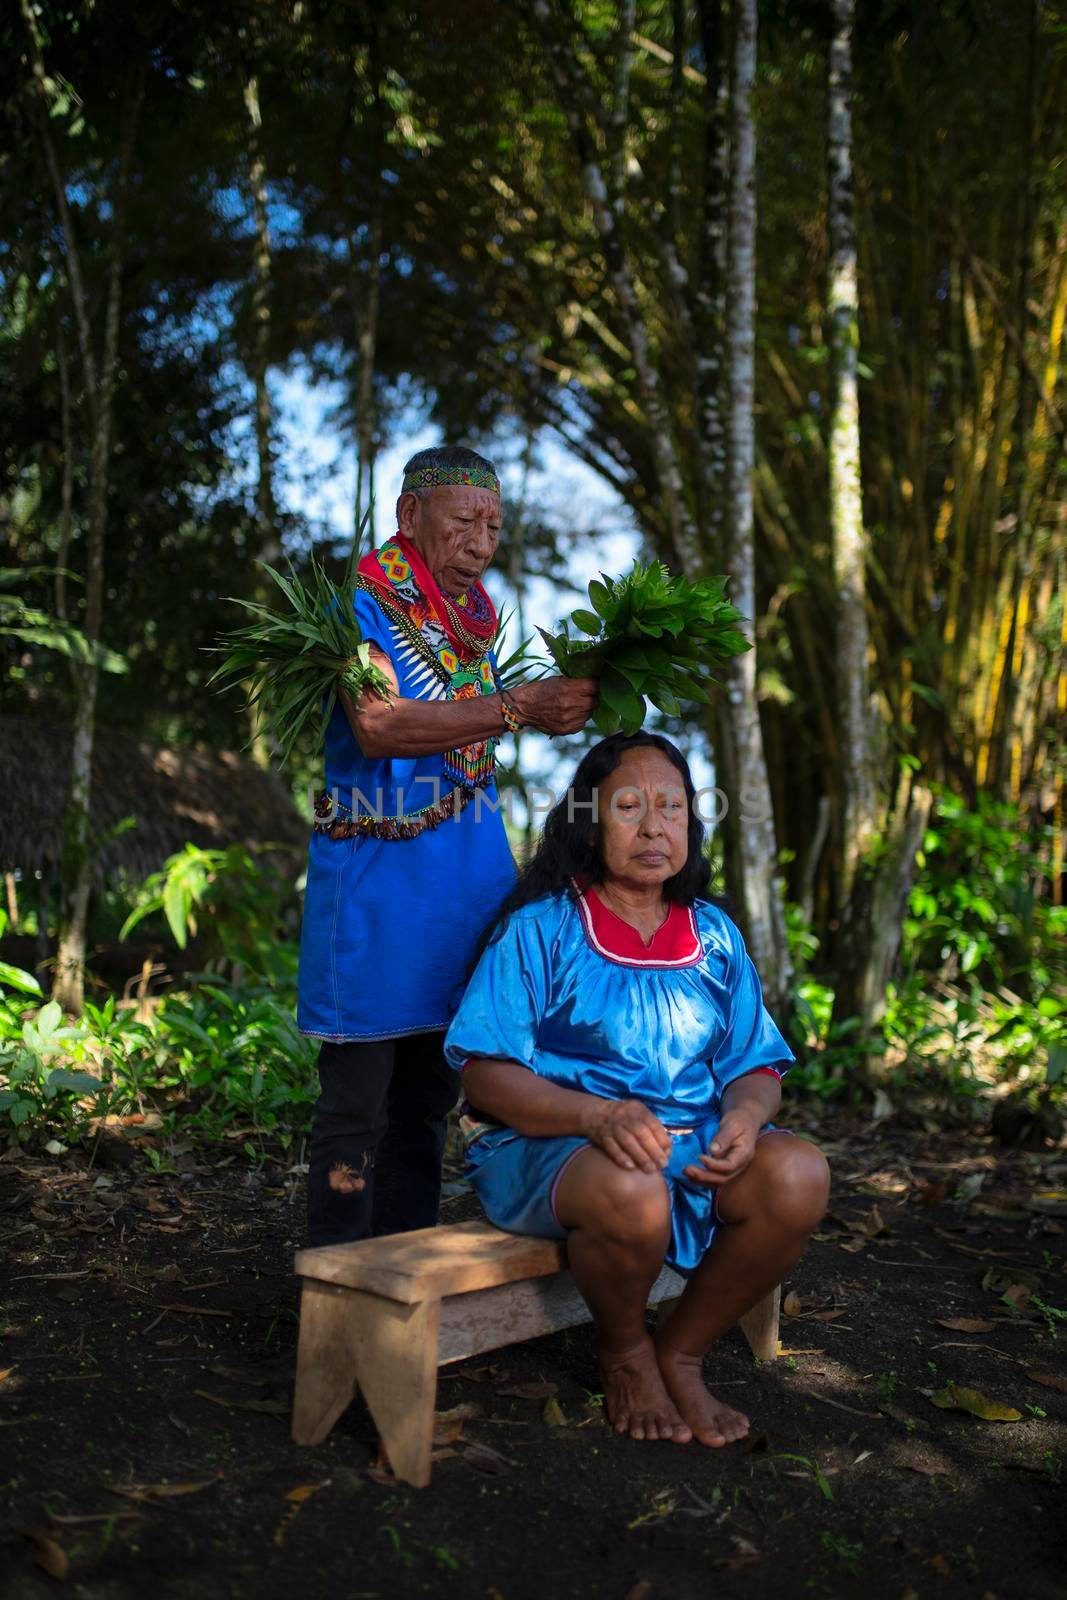 Elderly indigenous shaman of Cofan nationality performing healing ritual to a Cofan woman in the Amazon rainforest by alejomiranda